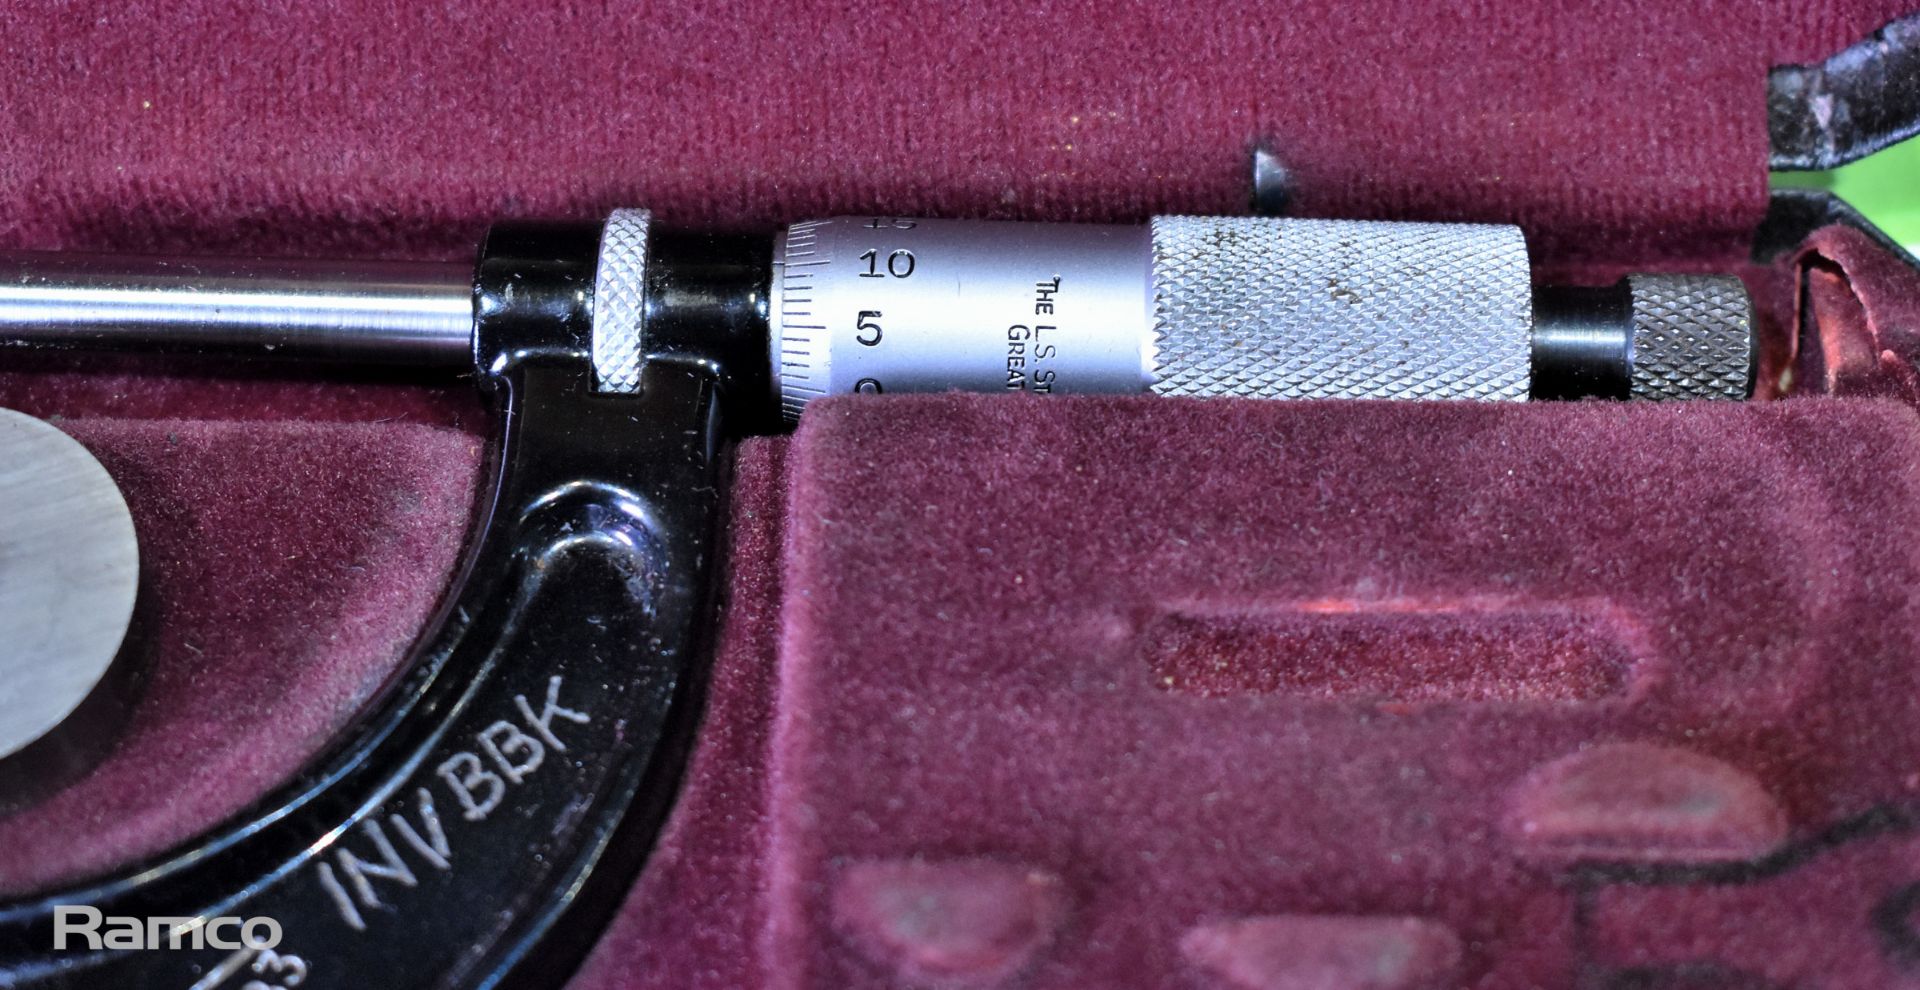 Starrett No 436 25-50mm micrometer caliper with case (incomplete) - Image 3 of 3